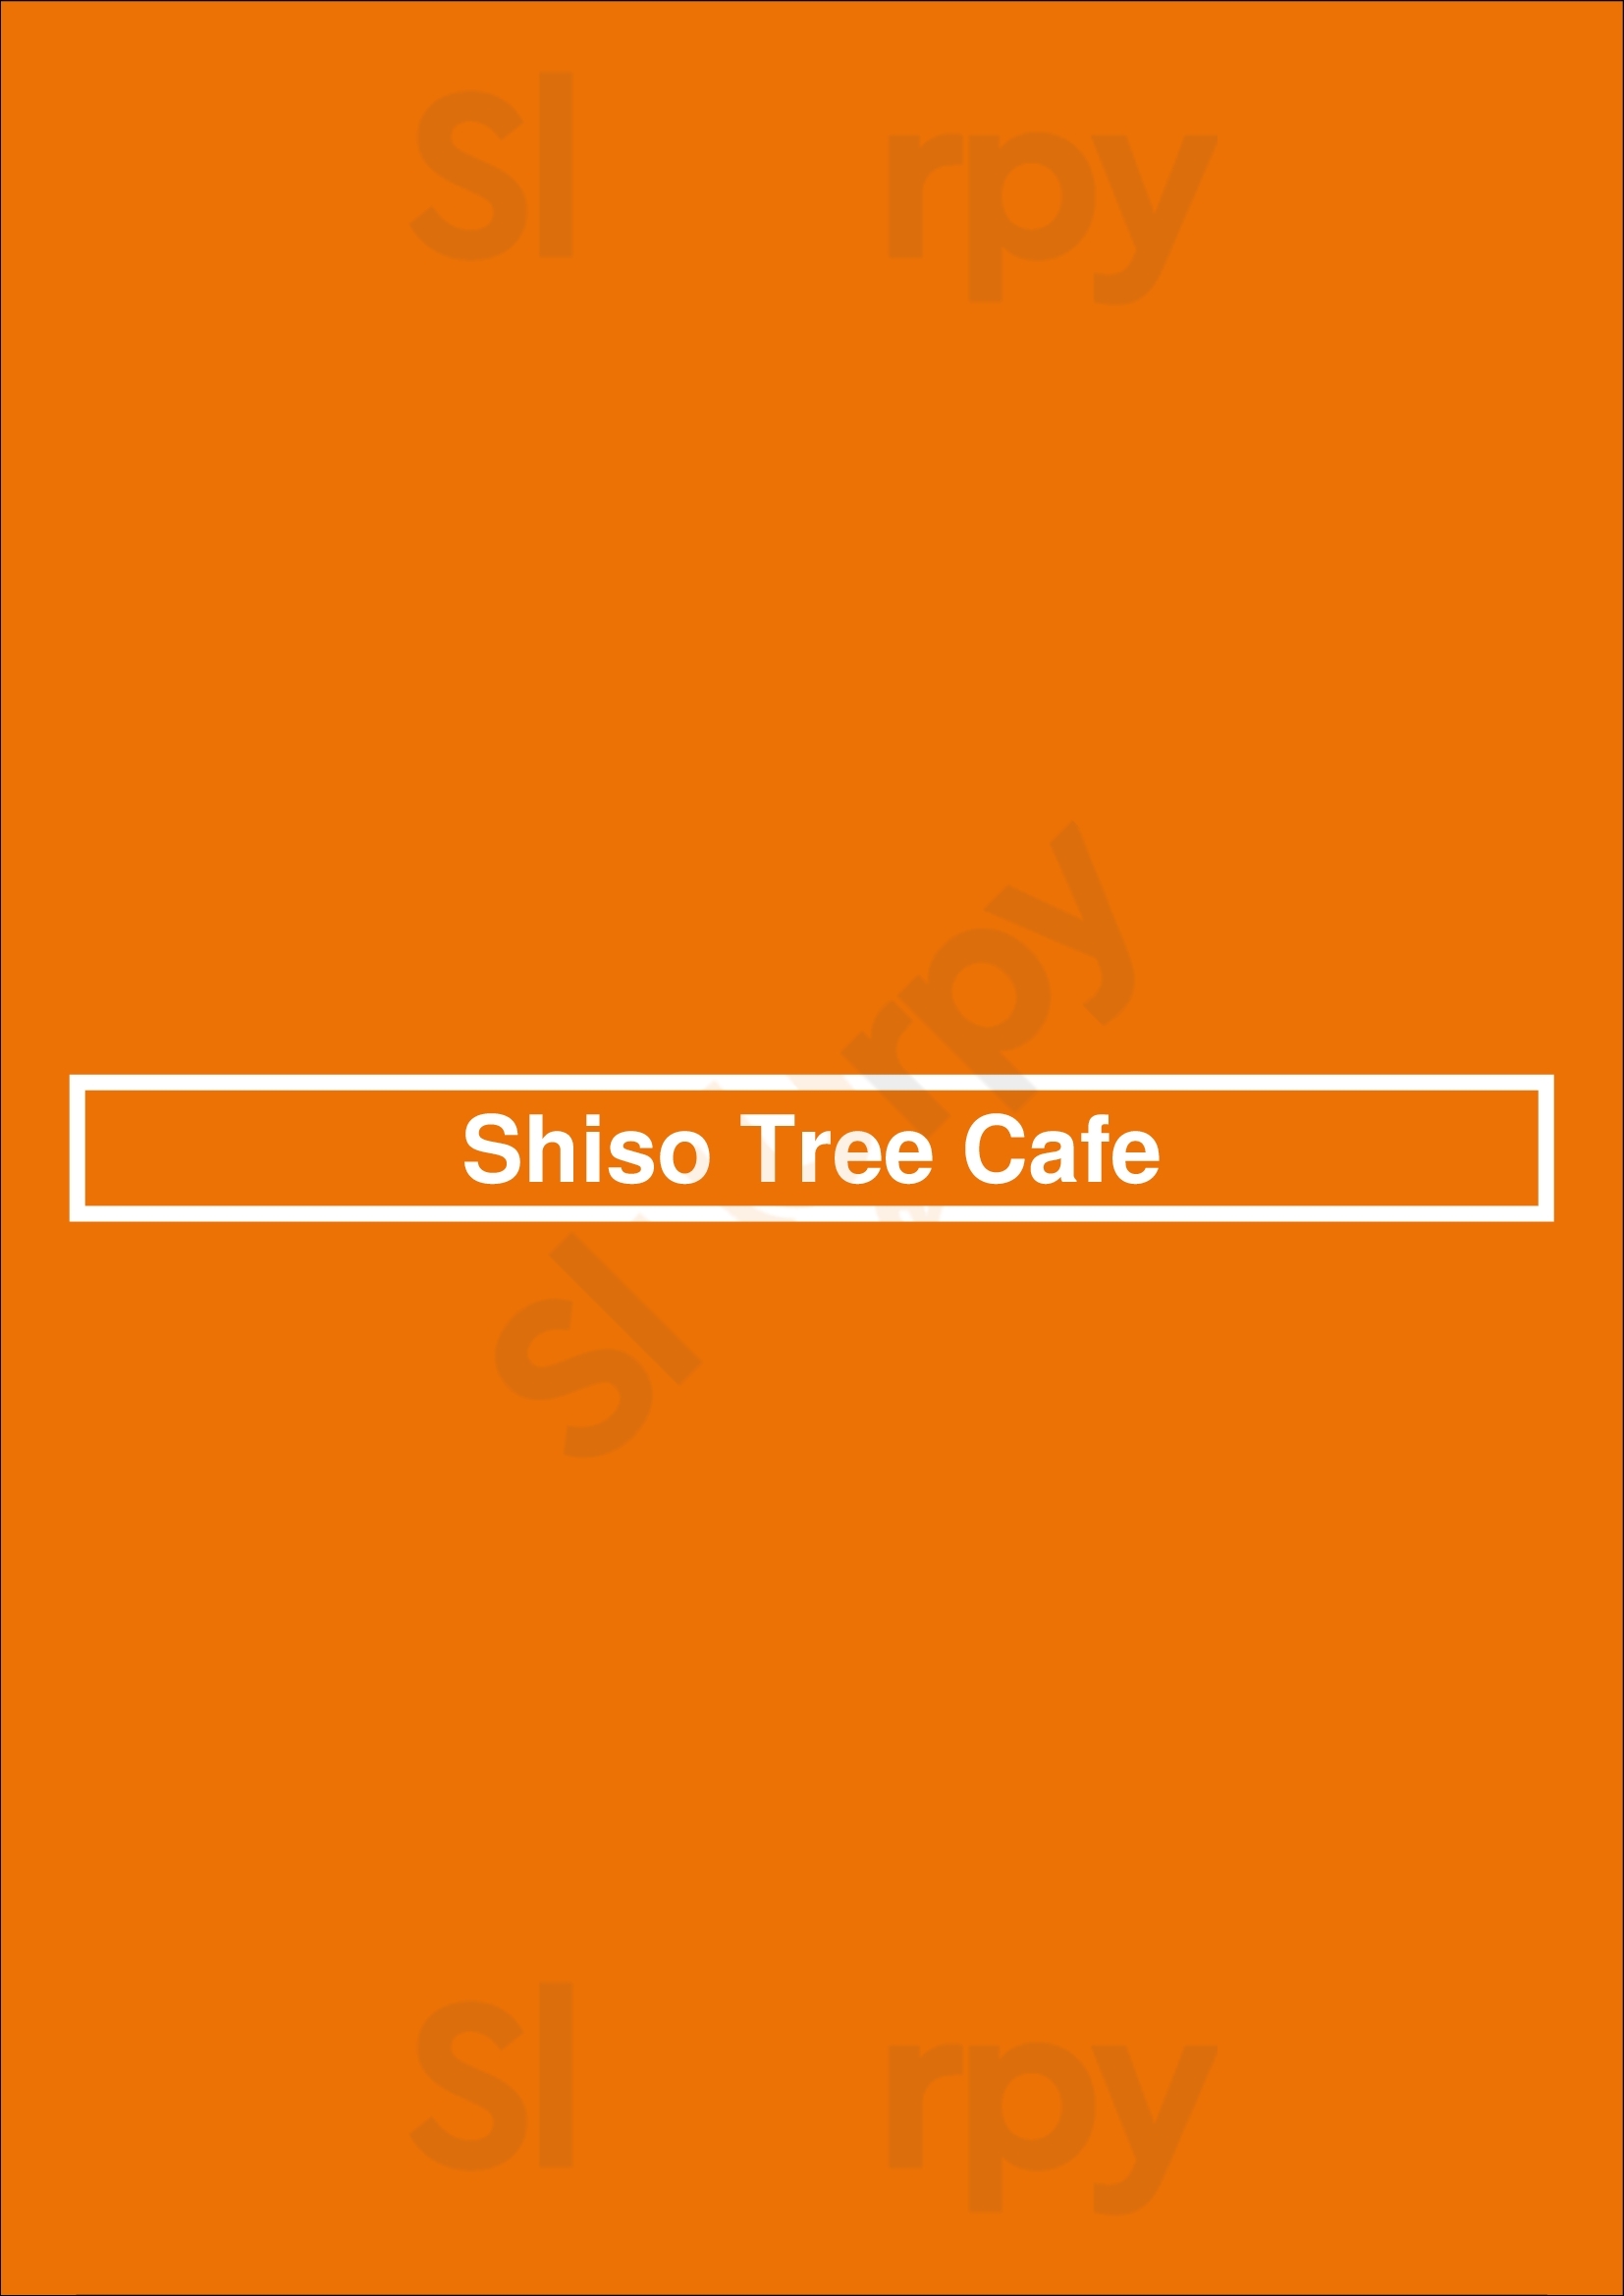 Shiso Tree Cafe Markham Menu - 1